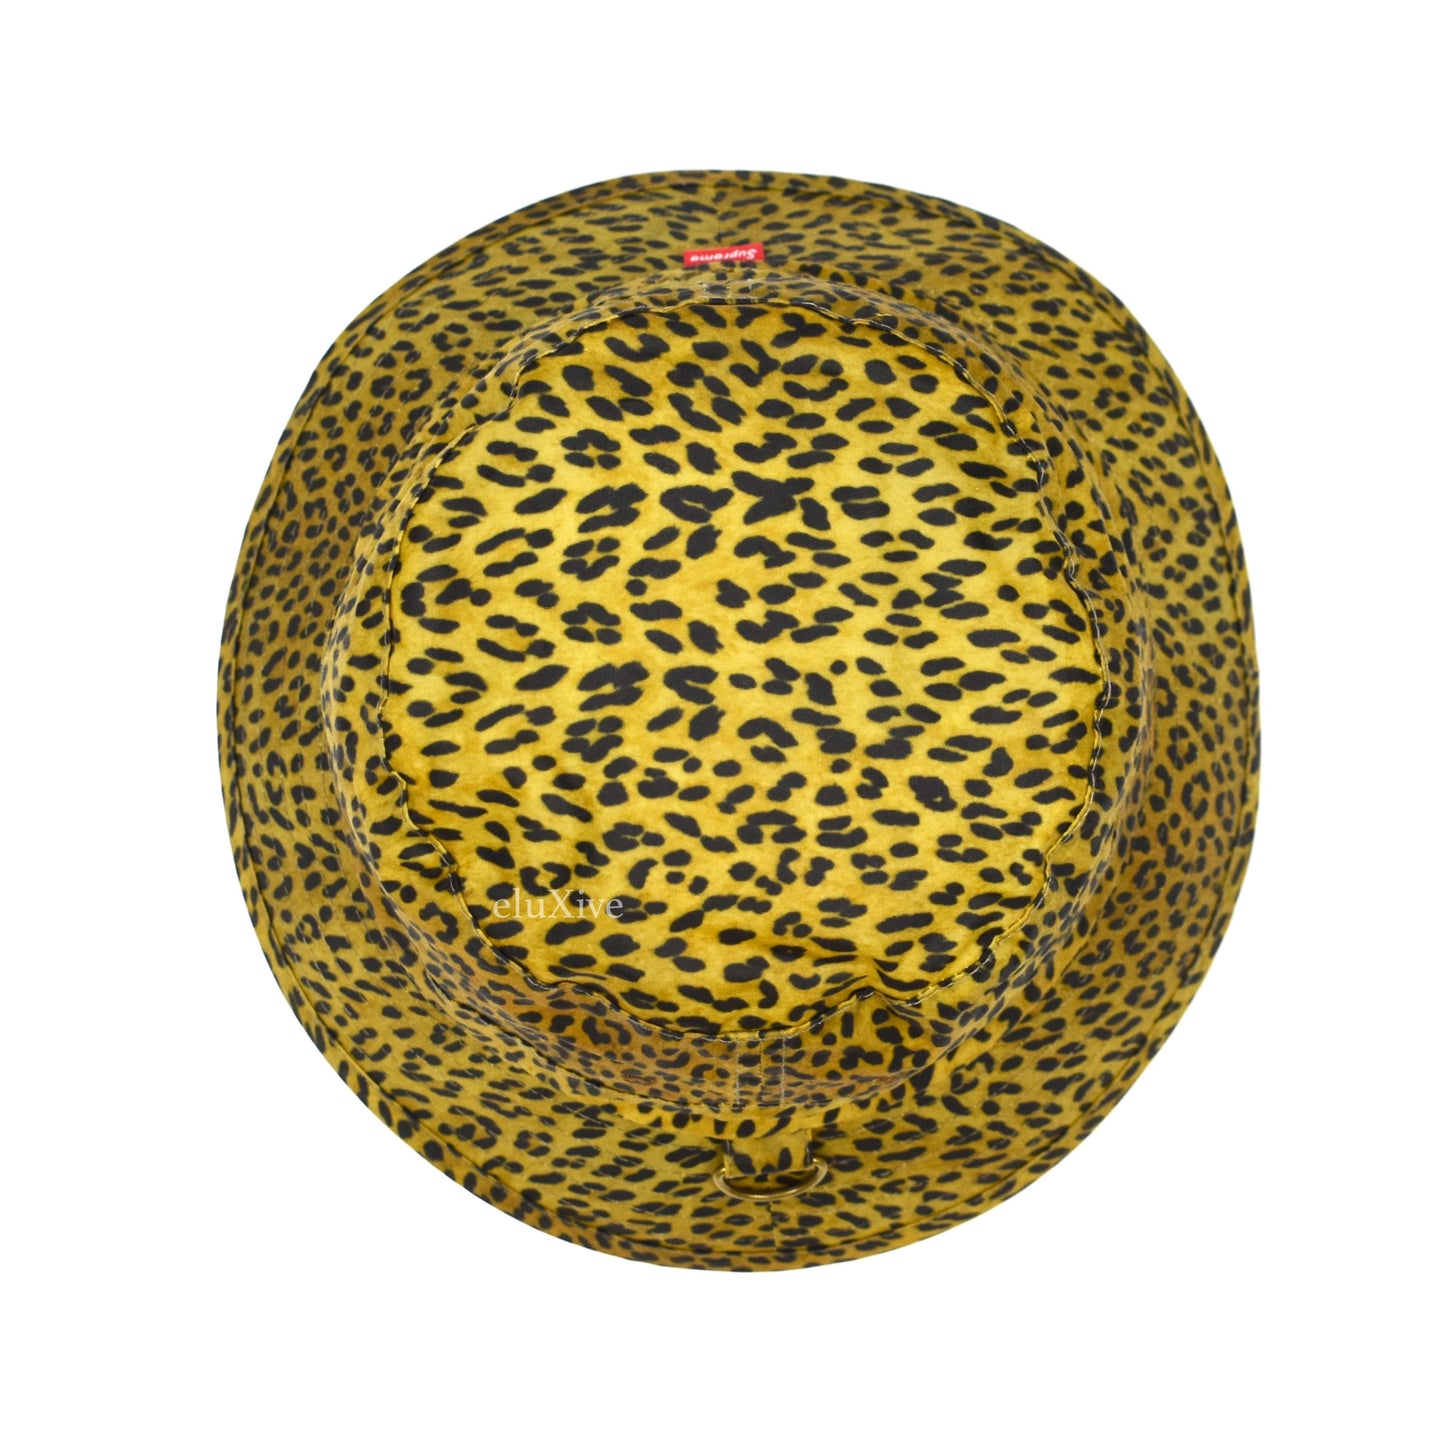 Supreme x Barbour - Leopard Print Waxed Canvas Bucket Hat